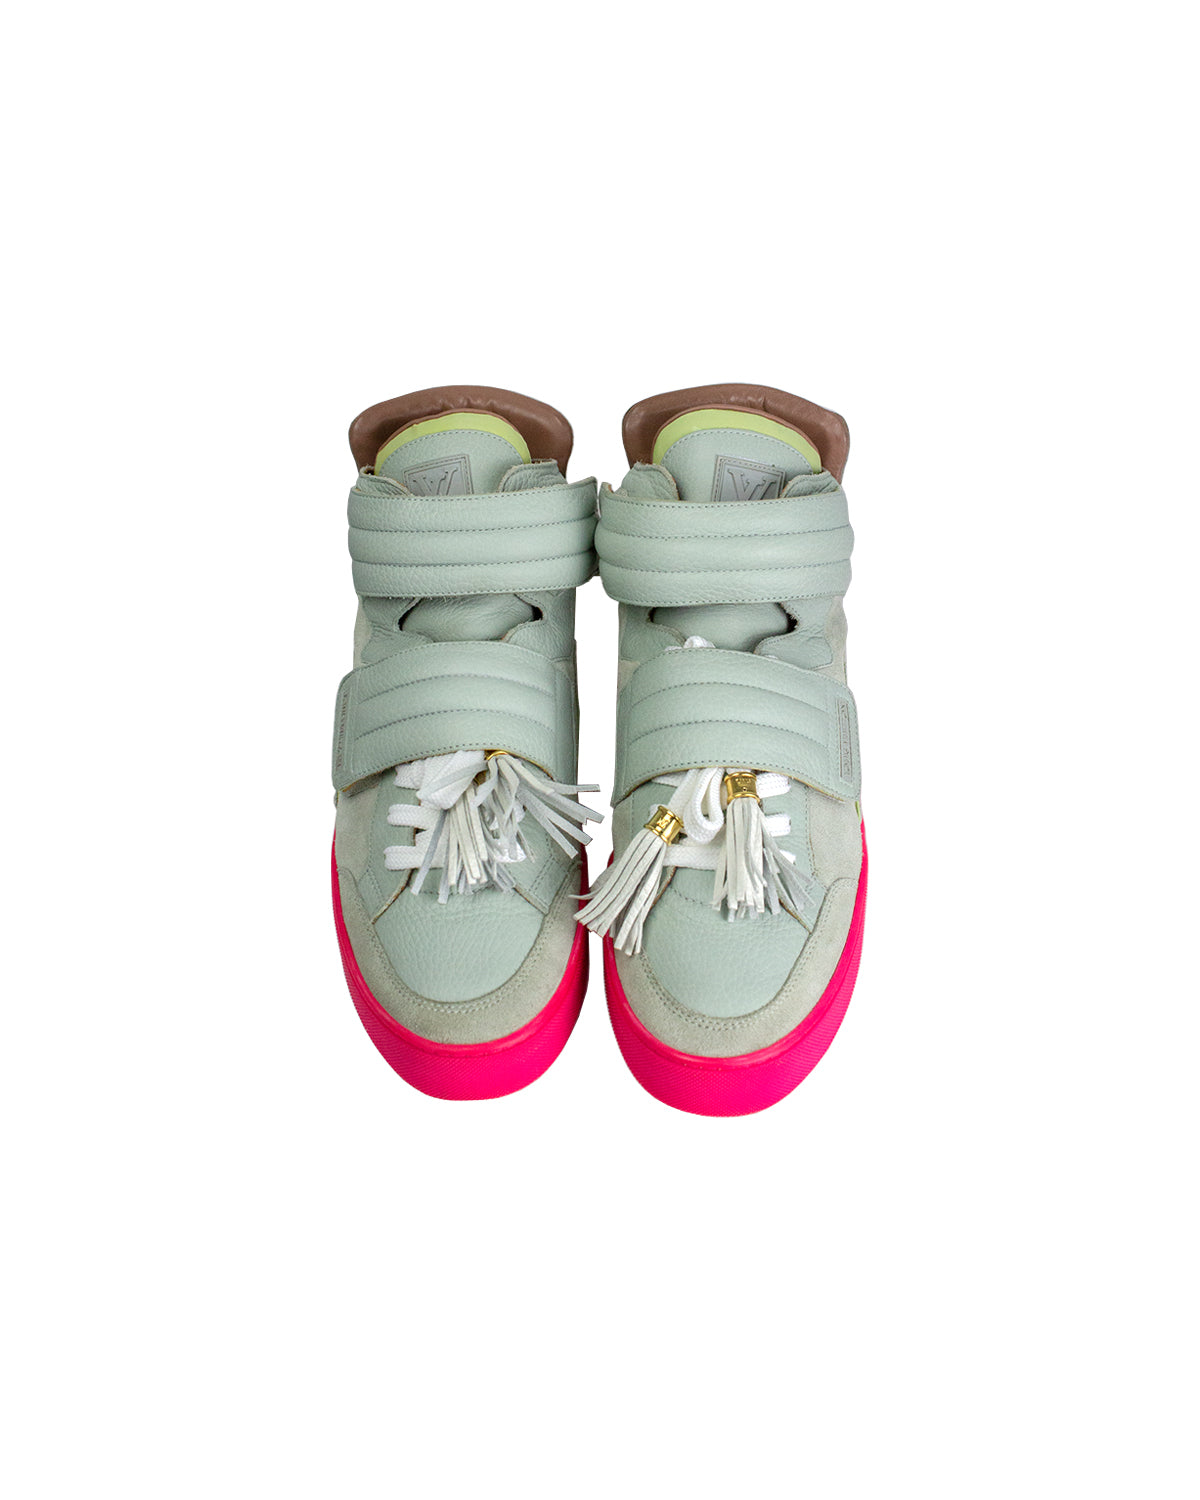 Louis Vuitton Jaspers Kanye Patchwork Zen Grey Pink Men's - YP6U6PMI - GB